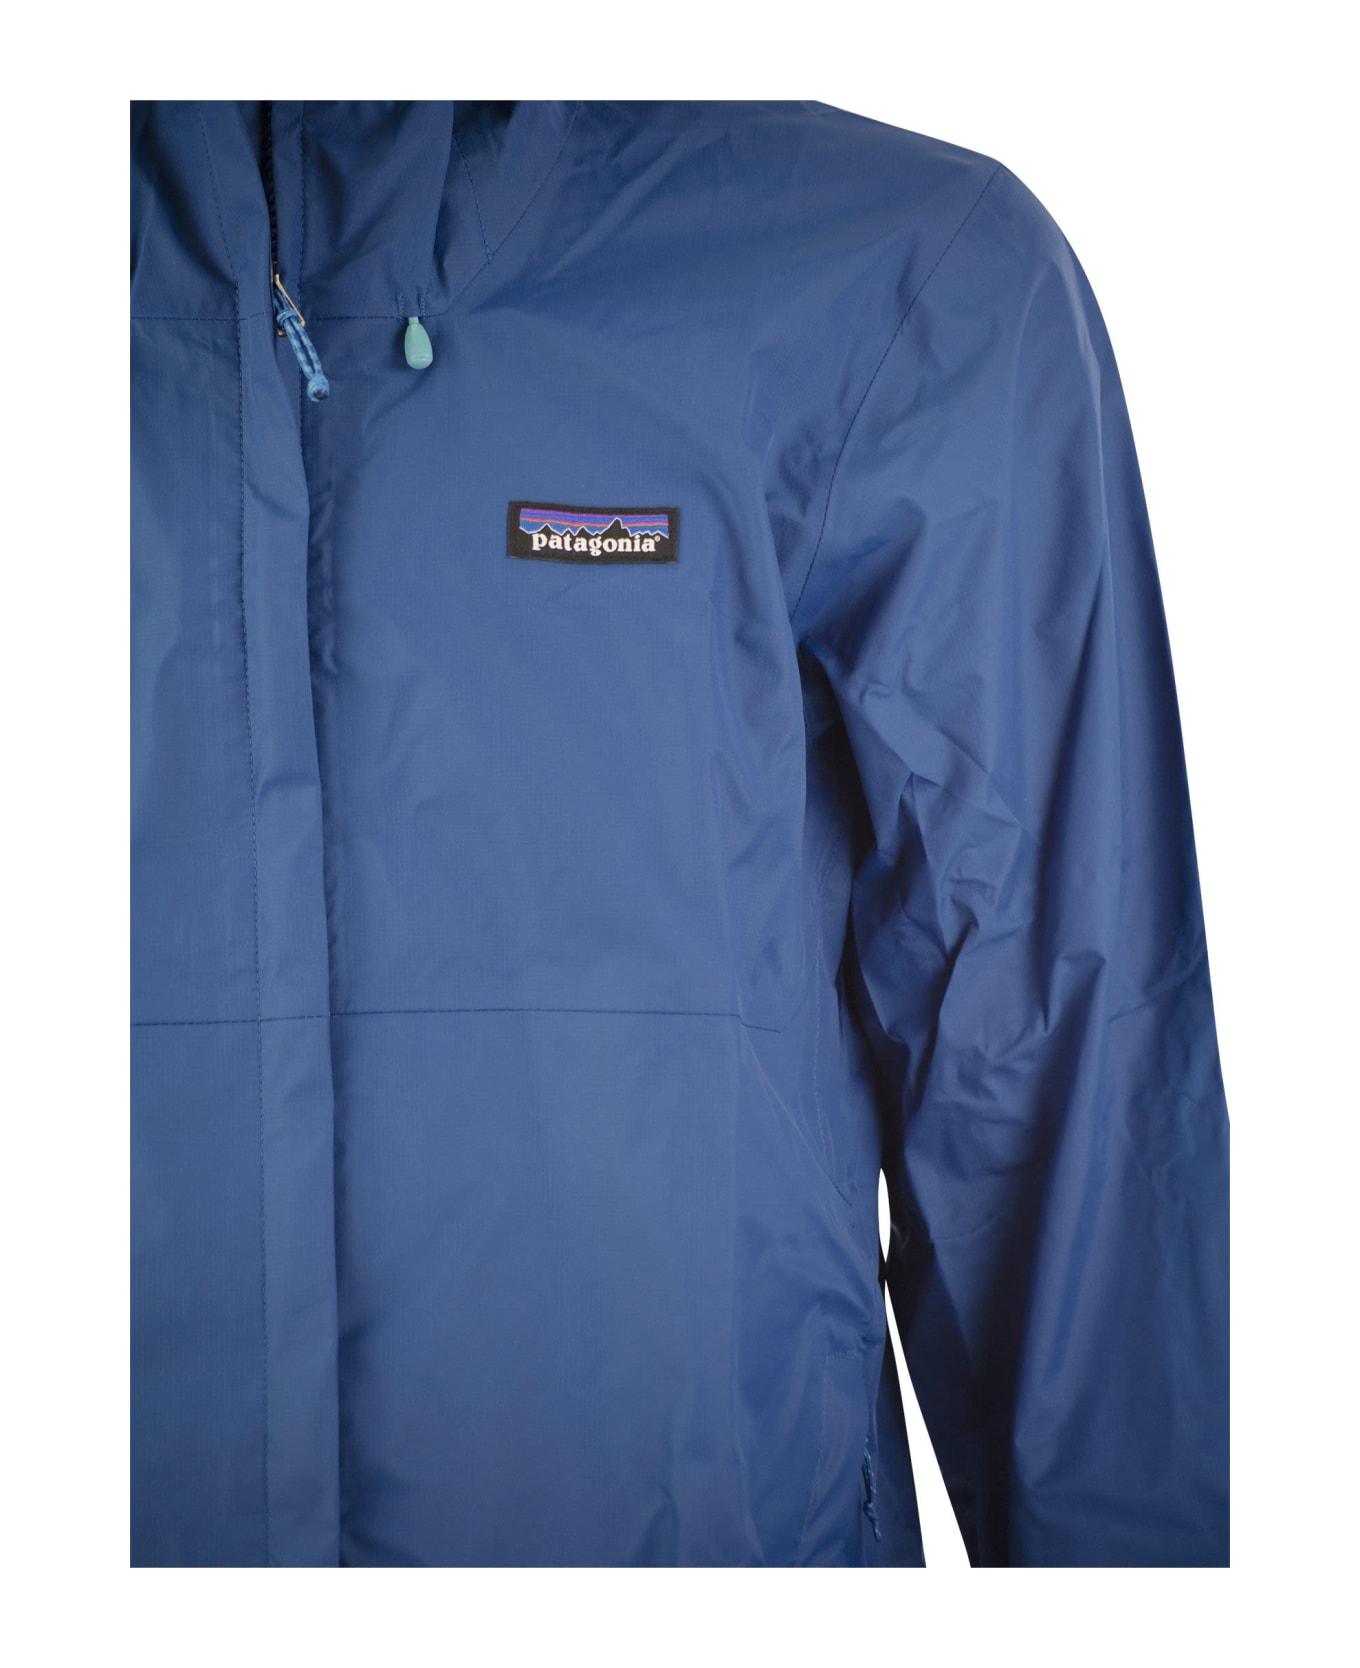 Patagonia Nylon Rainproof Jacket - Blue ジャケット